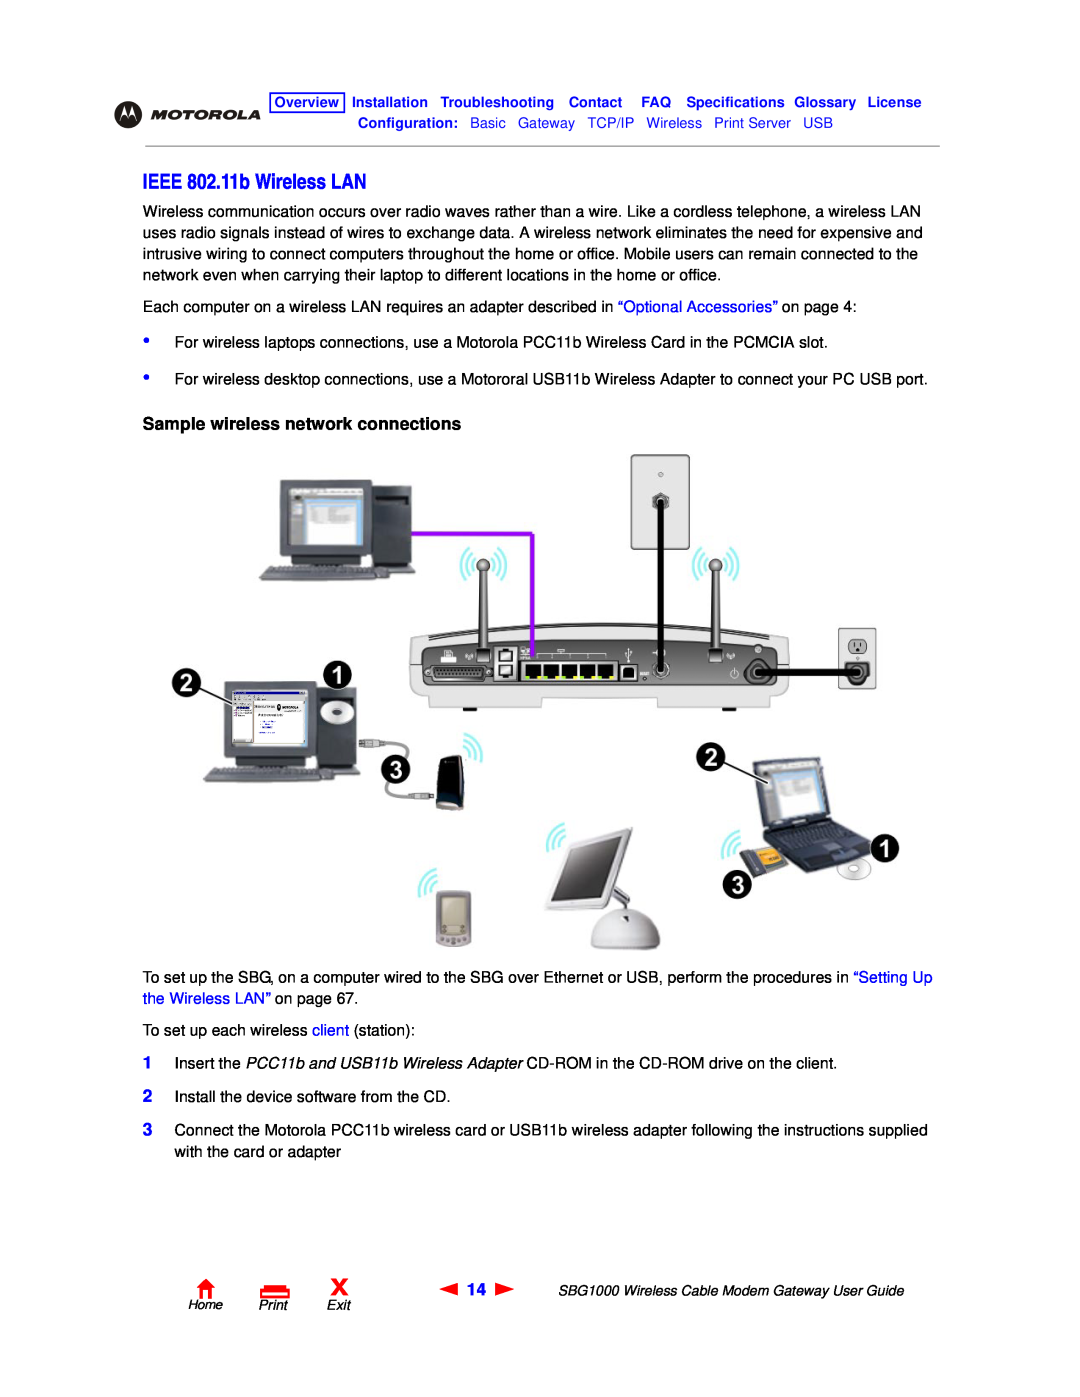 Motorola SBG1000 manual IEEE 802.11b Wireless LAN, Sample wireless network connections 